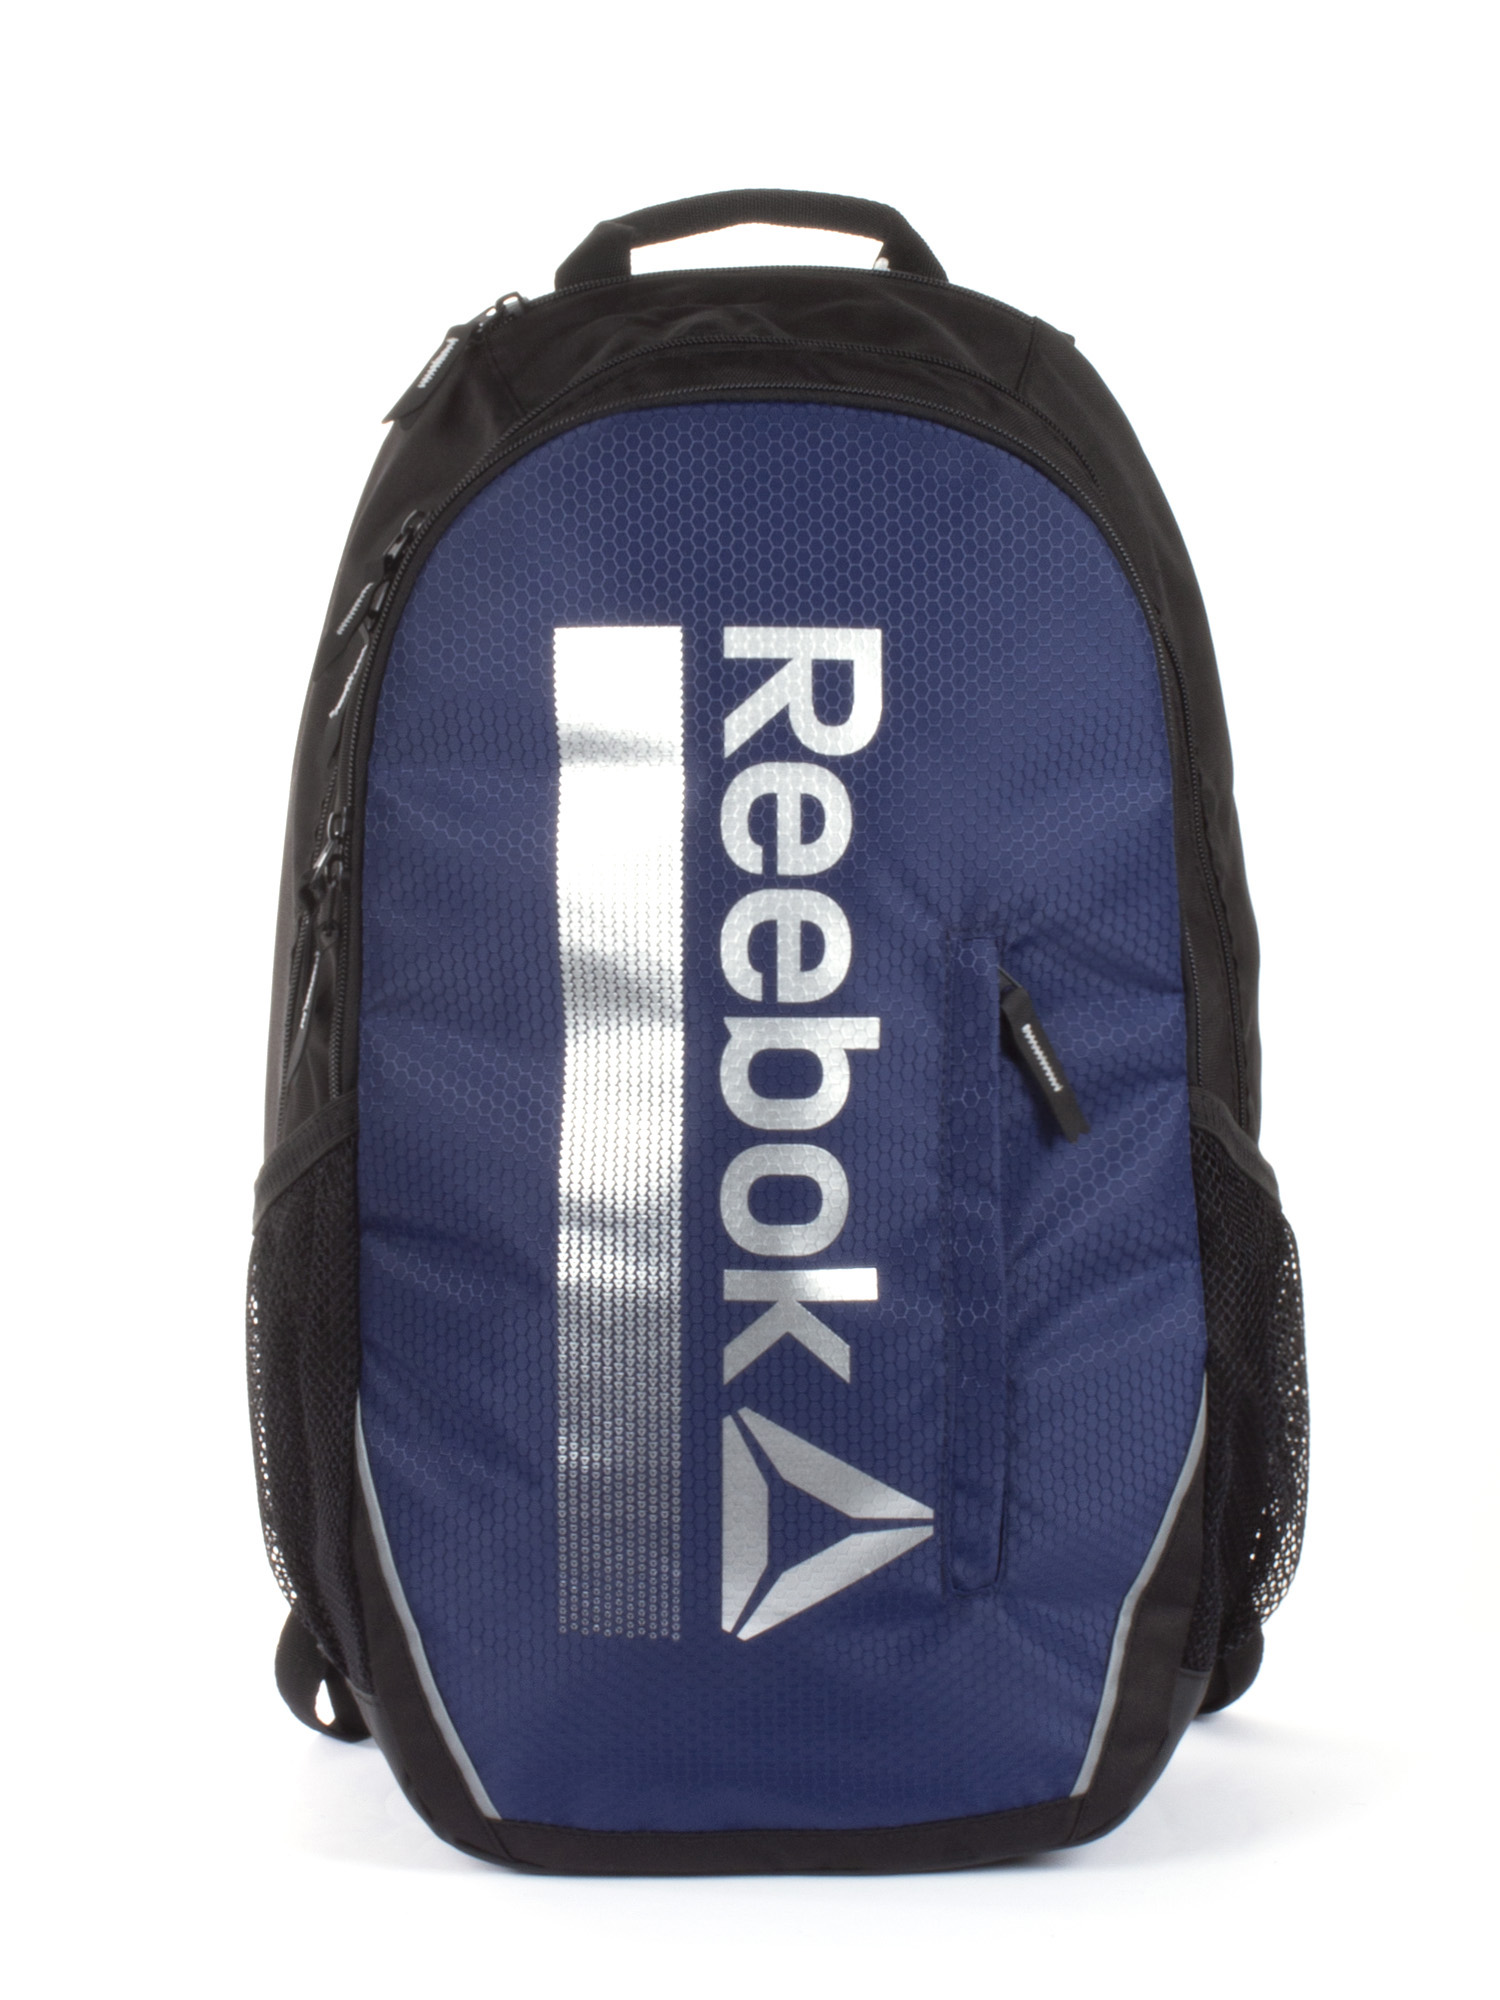 Reebok Trainer Navy Backpack - image 1 of 2